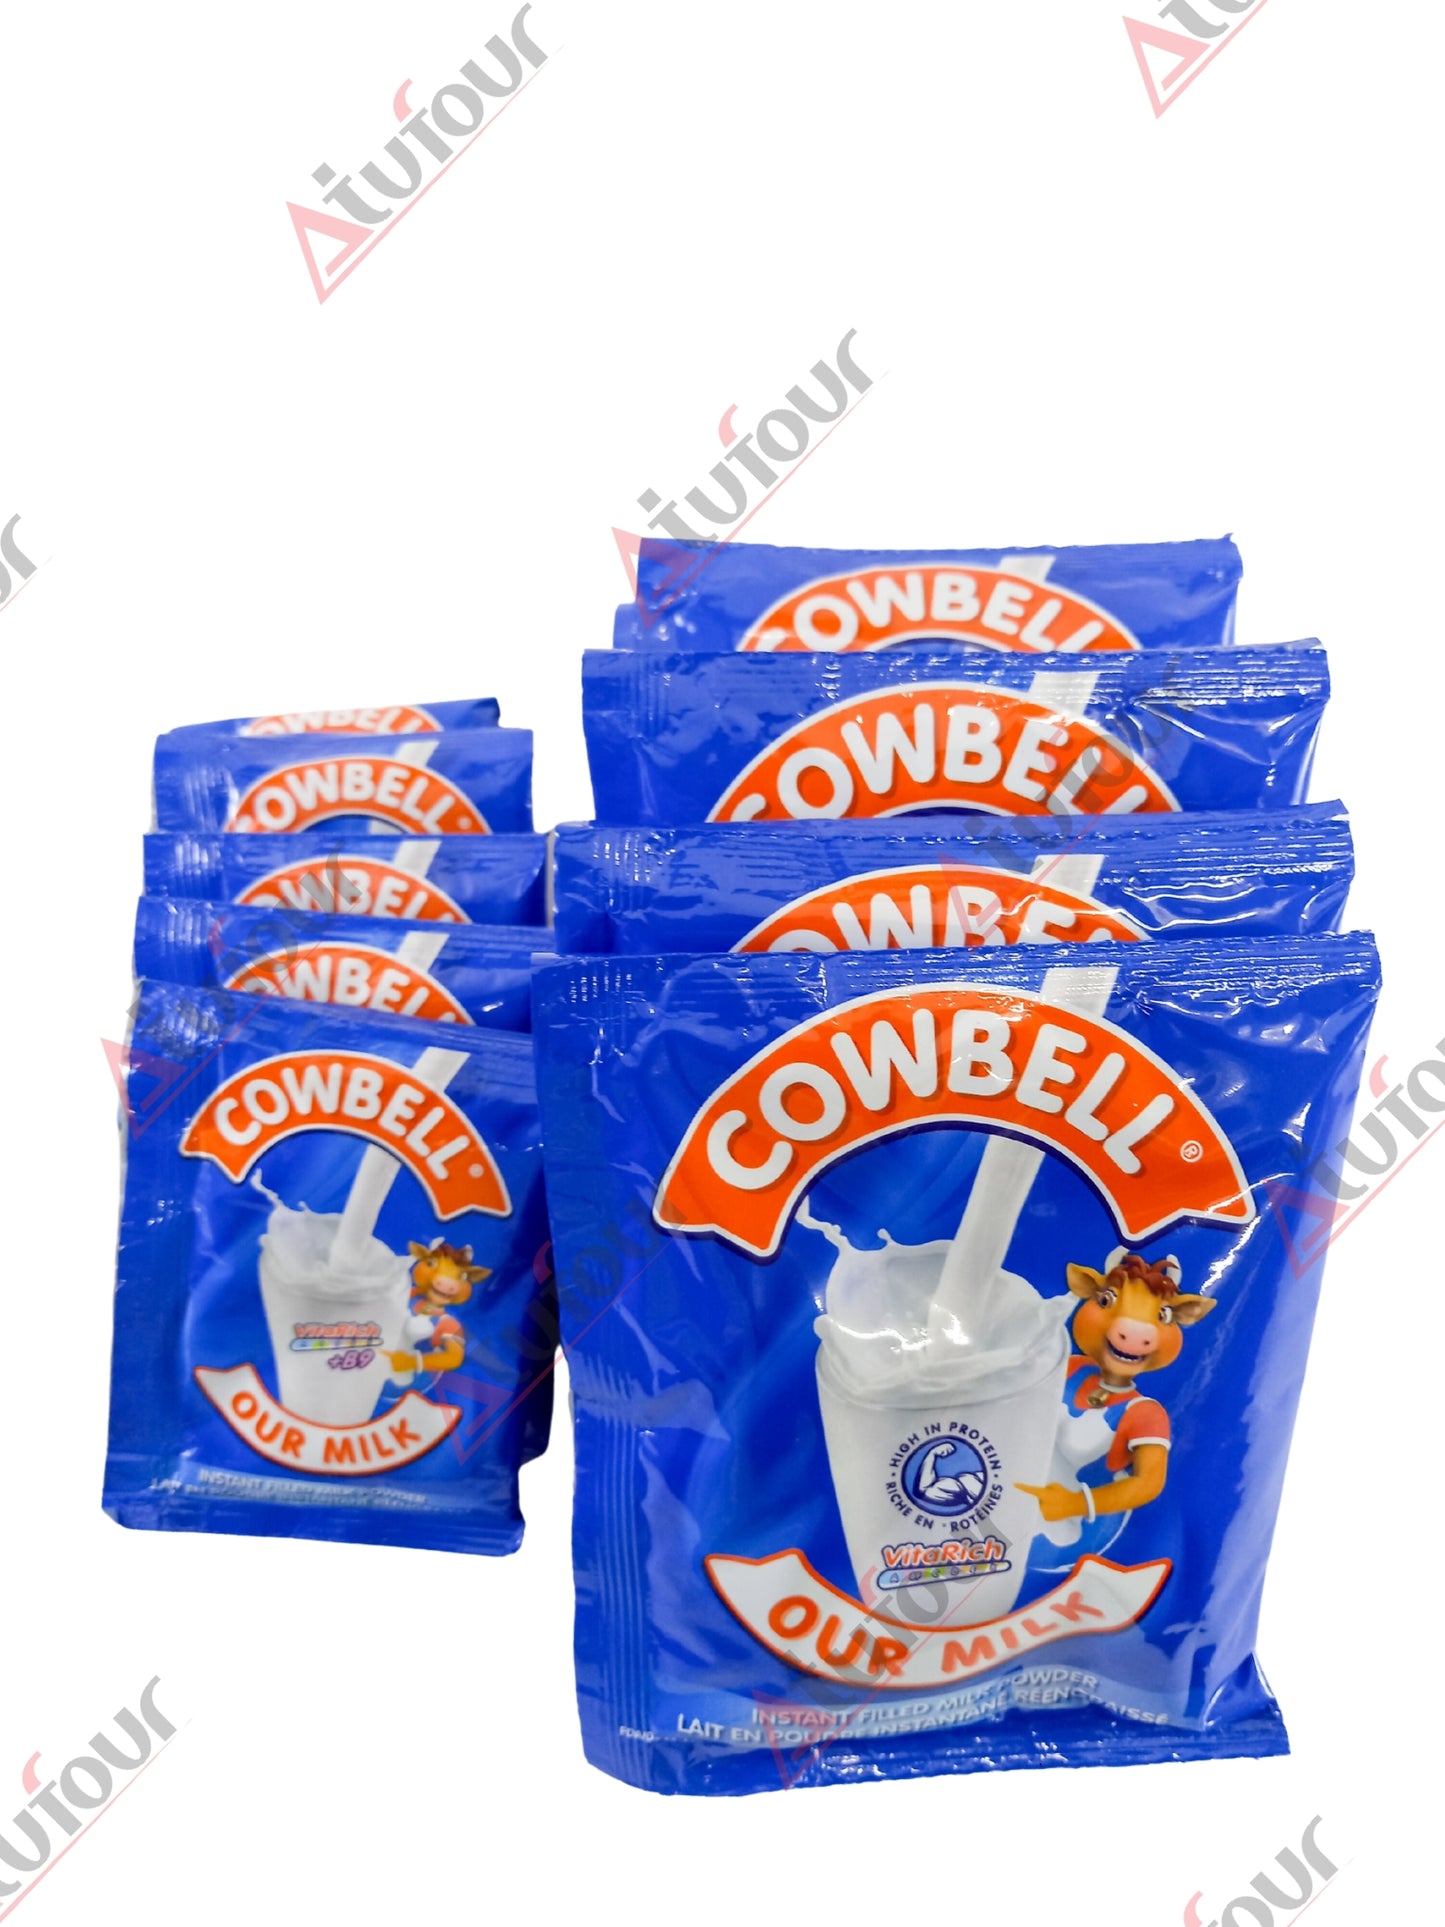 Cowbell Milk Powder Sachet 5g